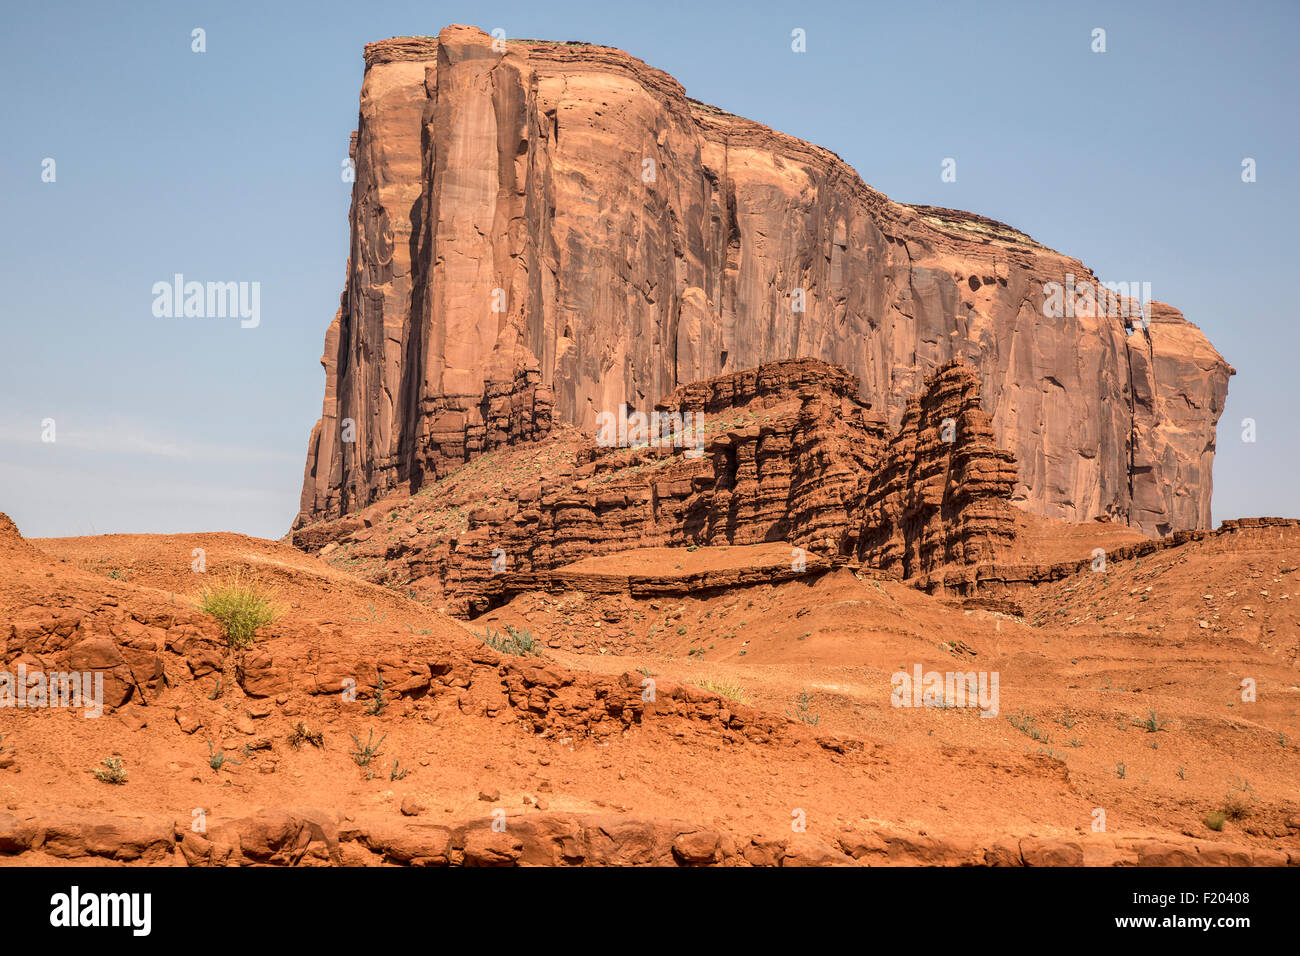 Monument Vallei, Utah y Arizona, EE.UU. panorama Foto de stock